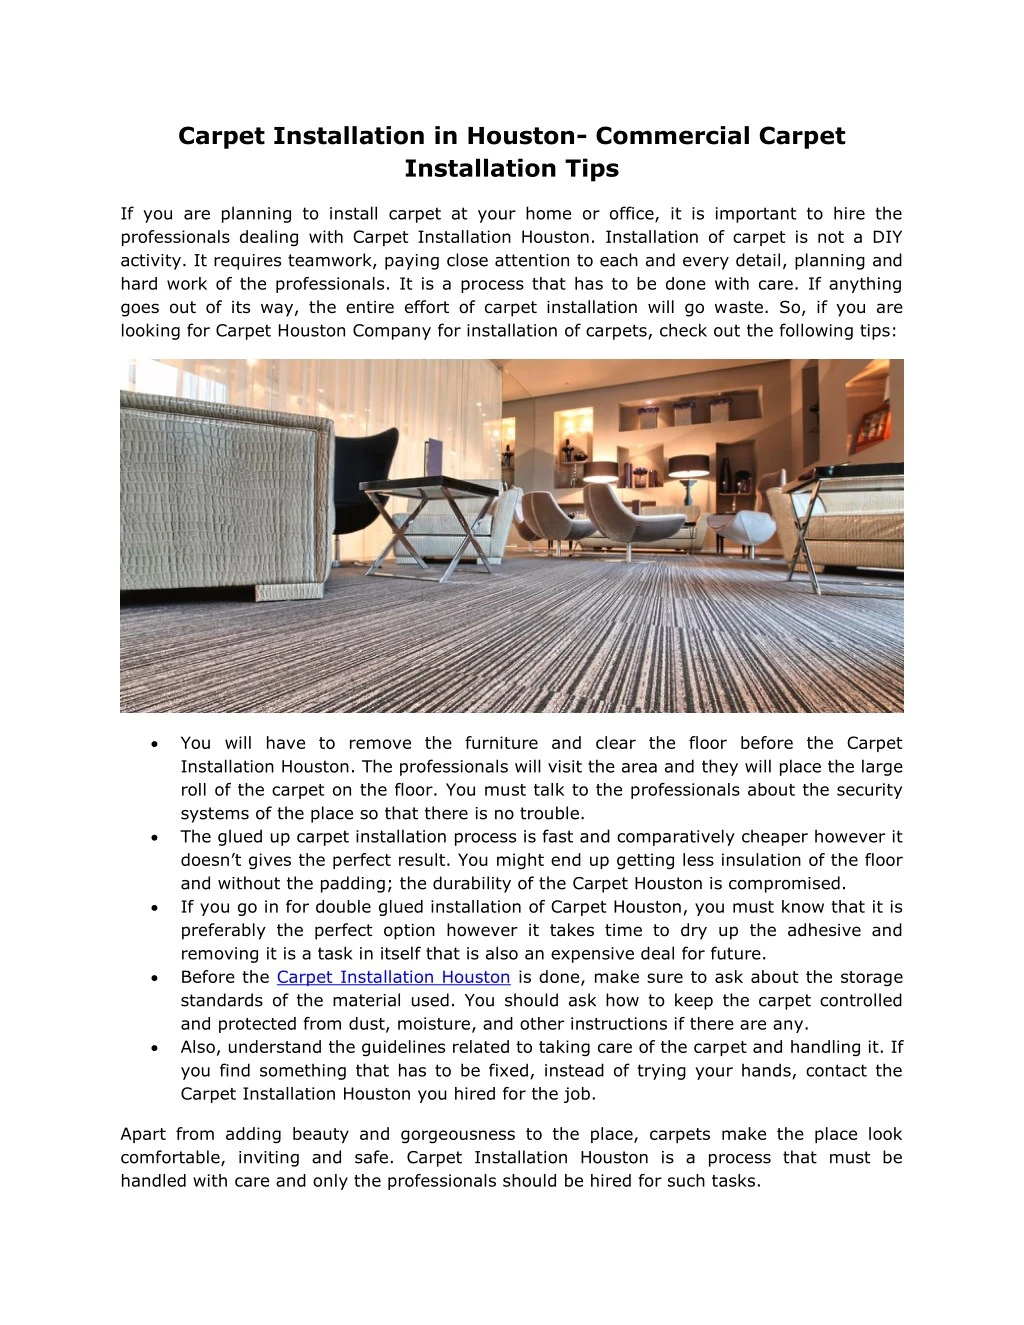 carpet installation in houston commercial carpet